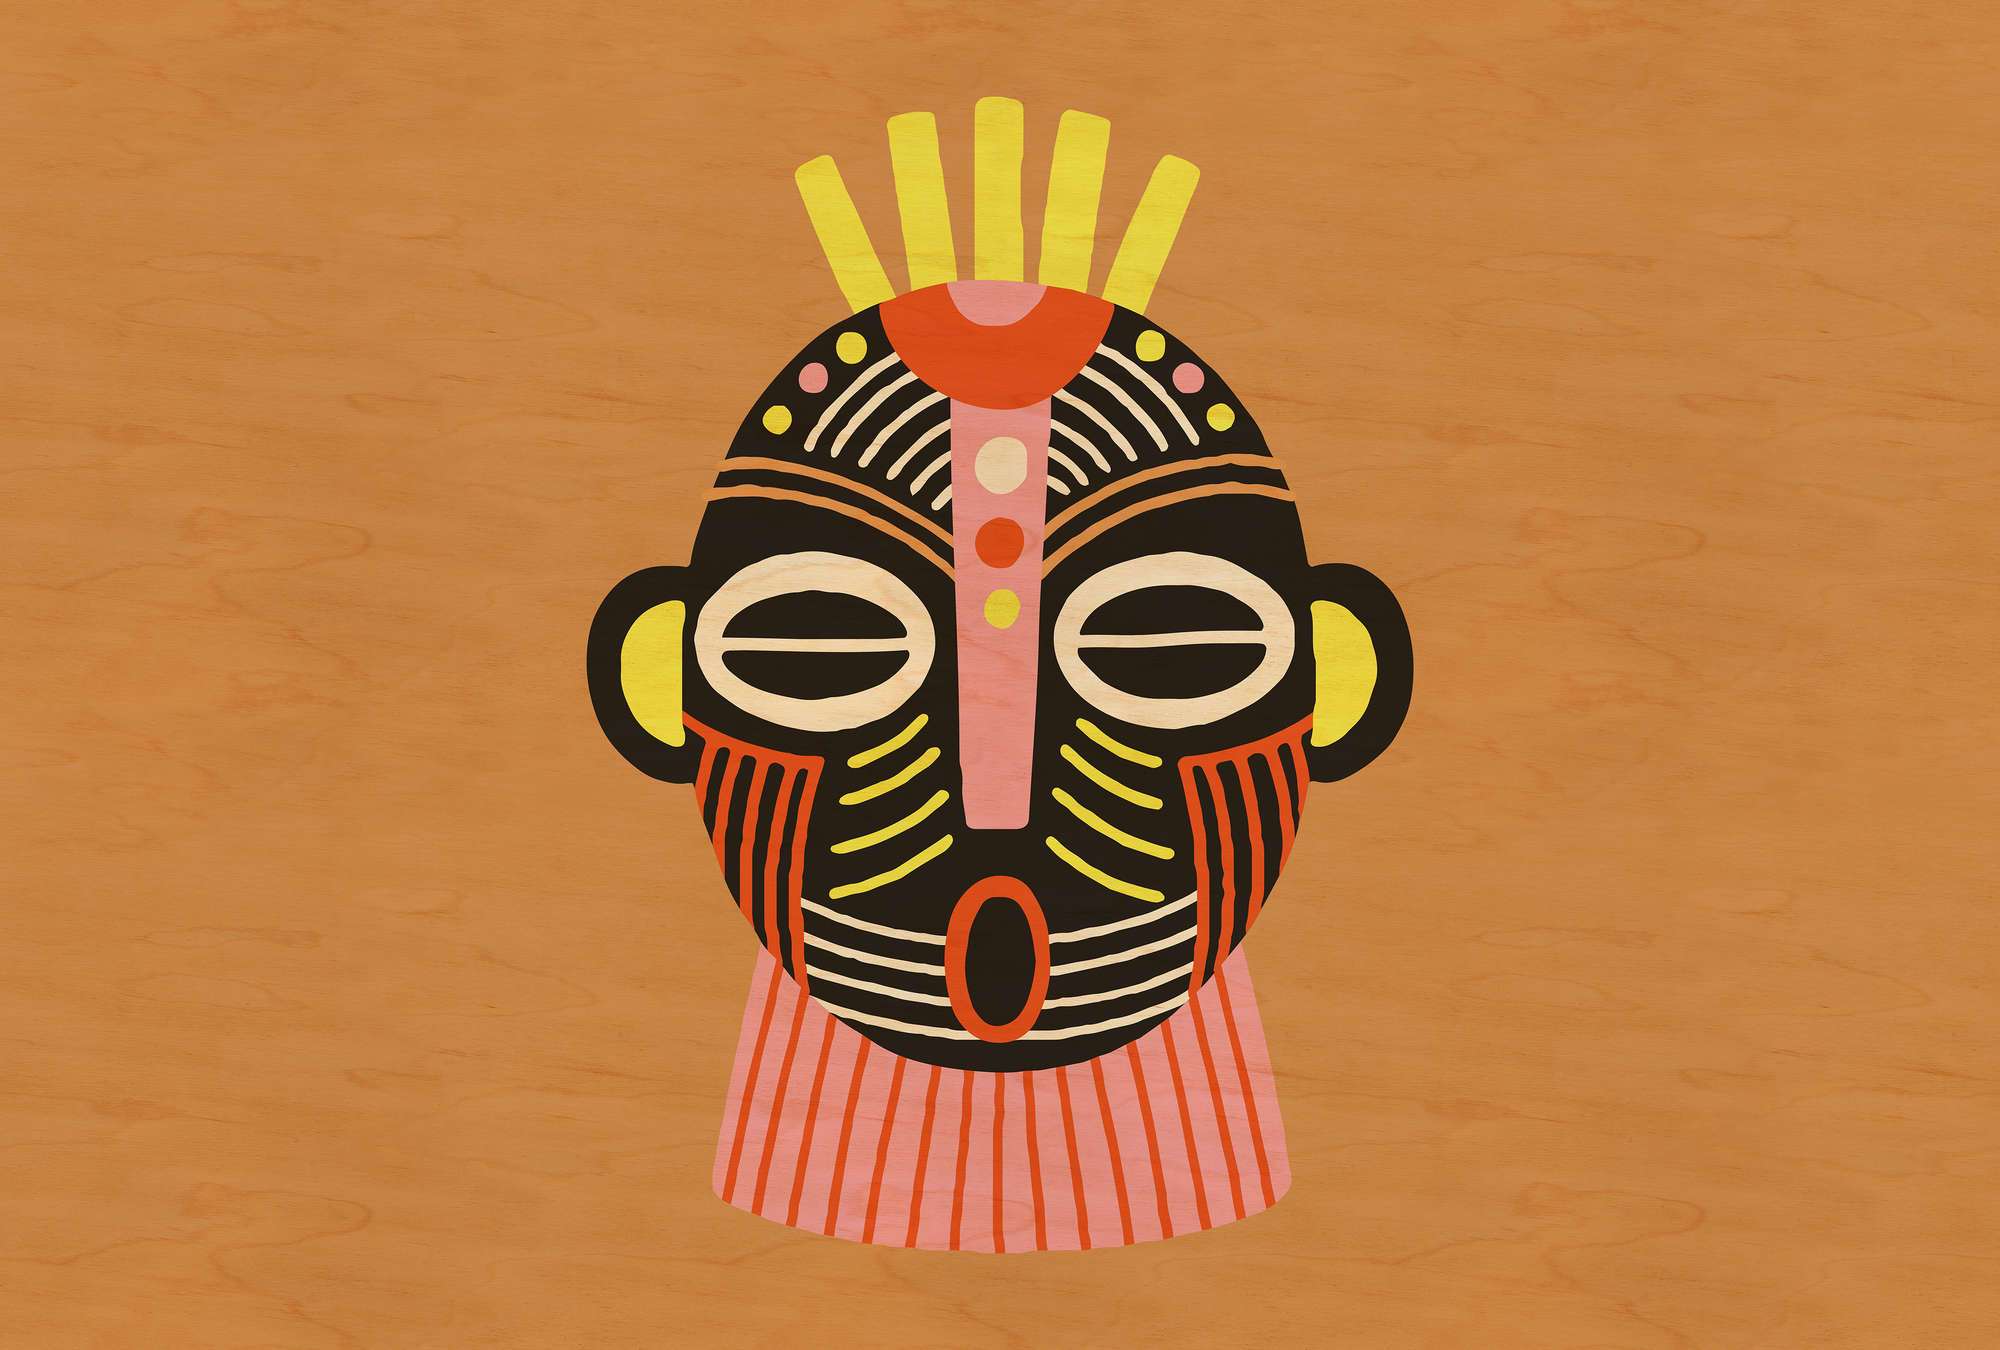             Overseas 4 - Fotomurali Africa Design Inspiration Mask
        